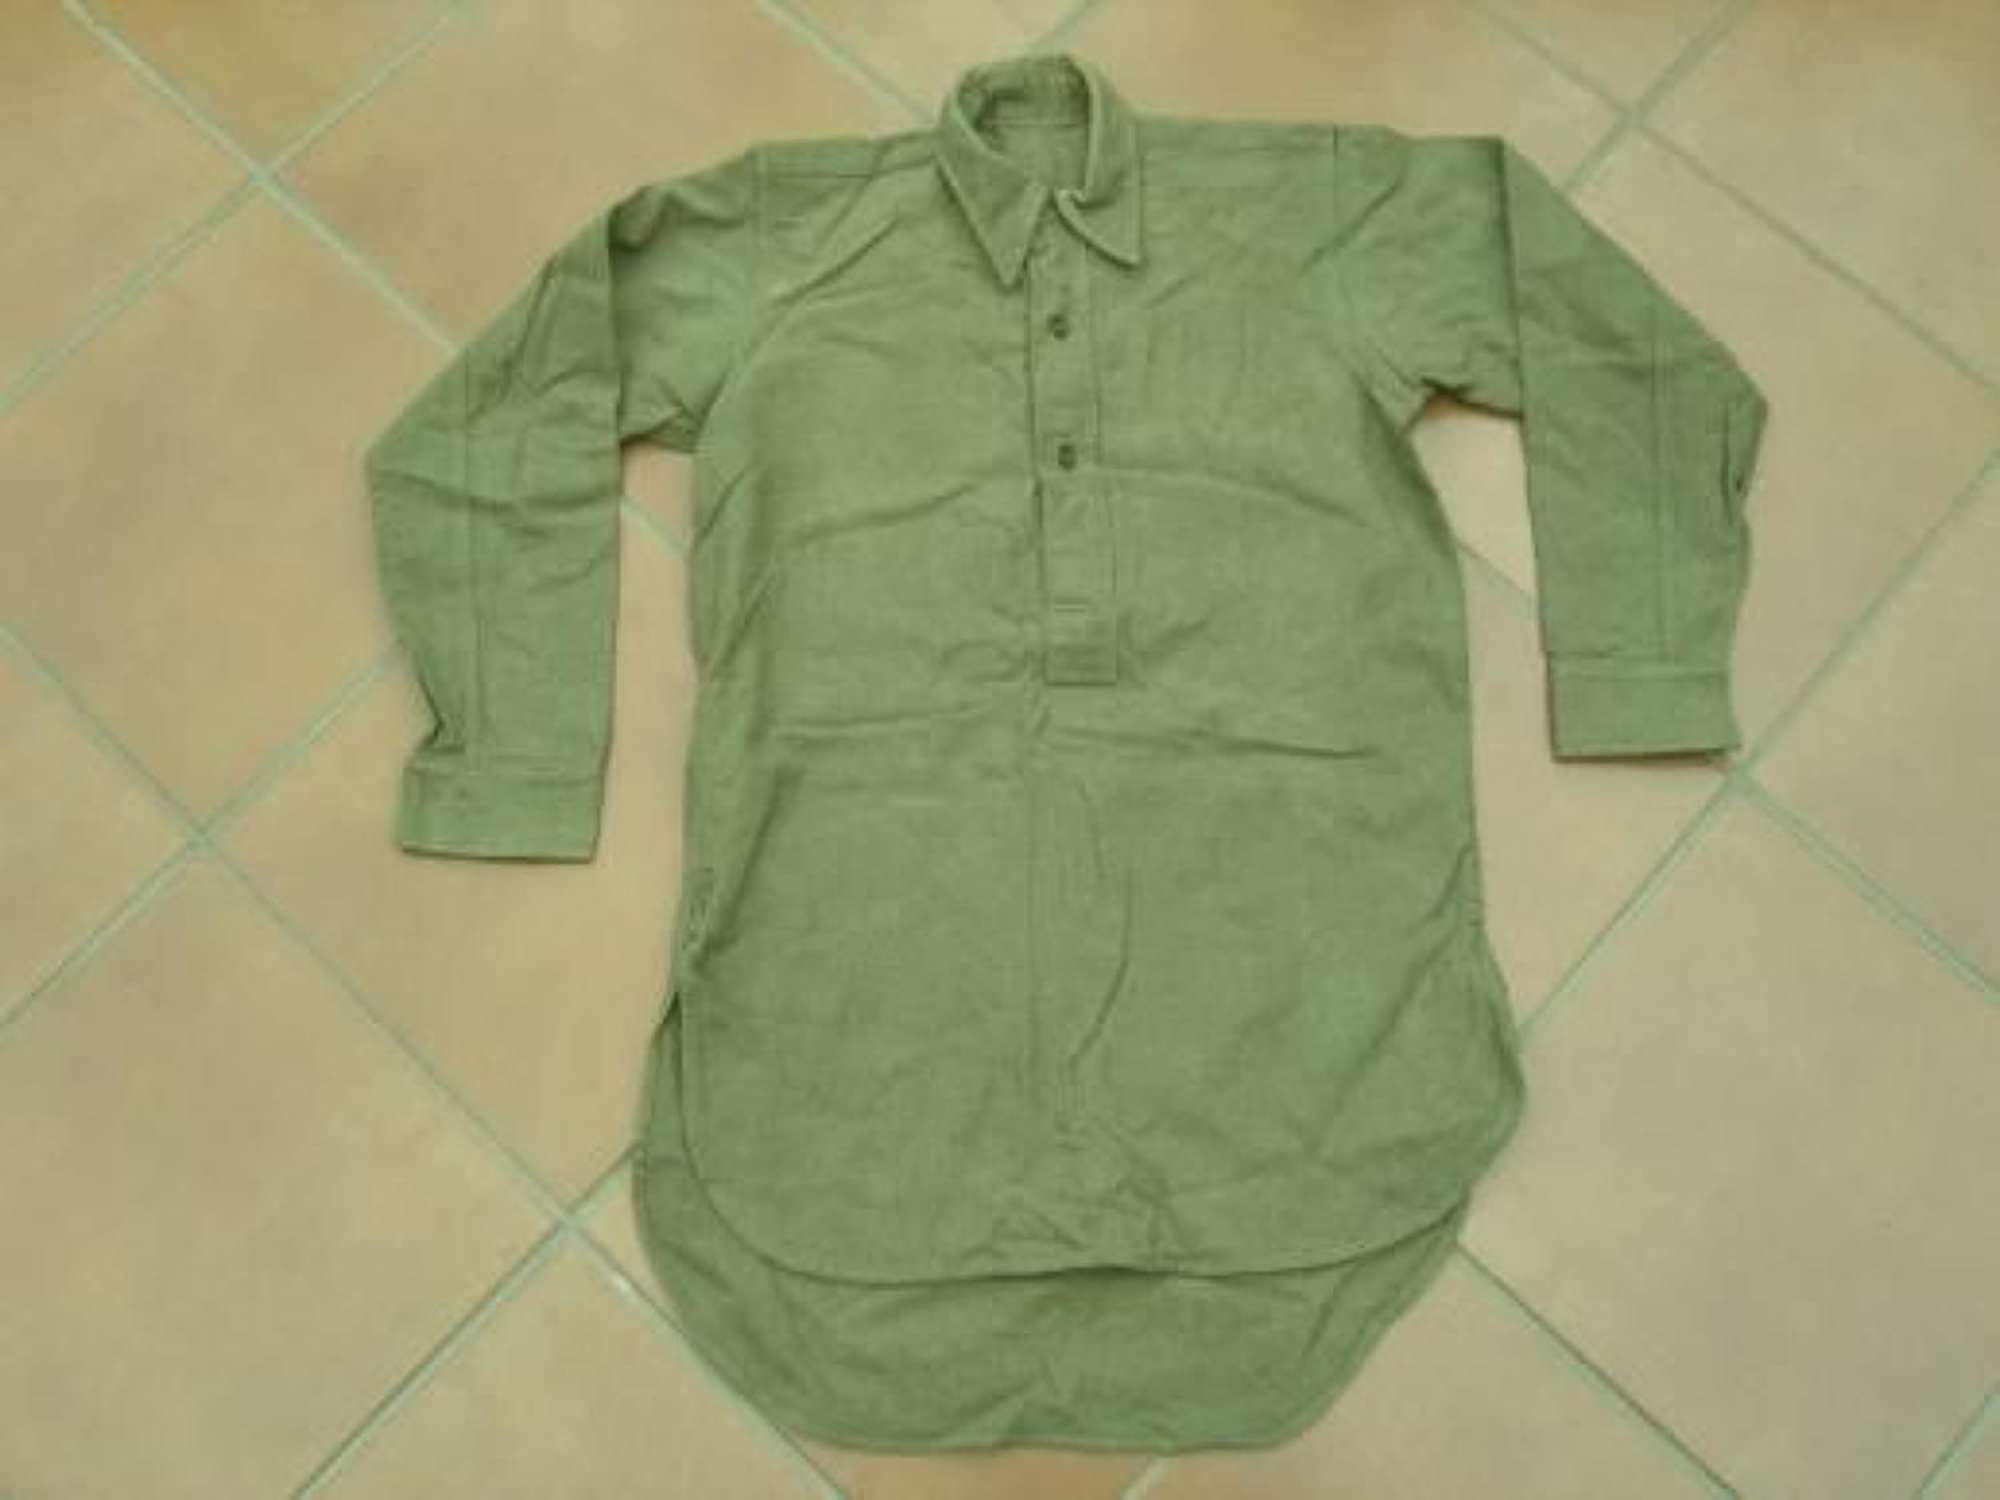 WW2 unissued Other Ranks service dress khaki shirt.